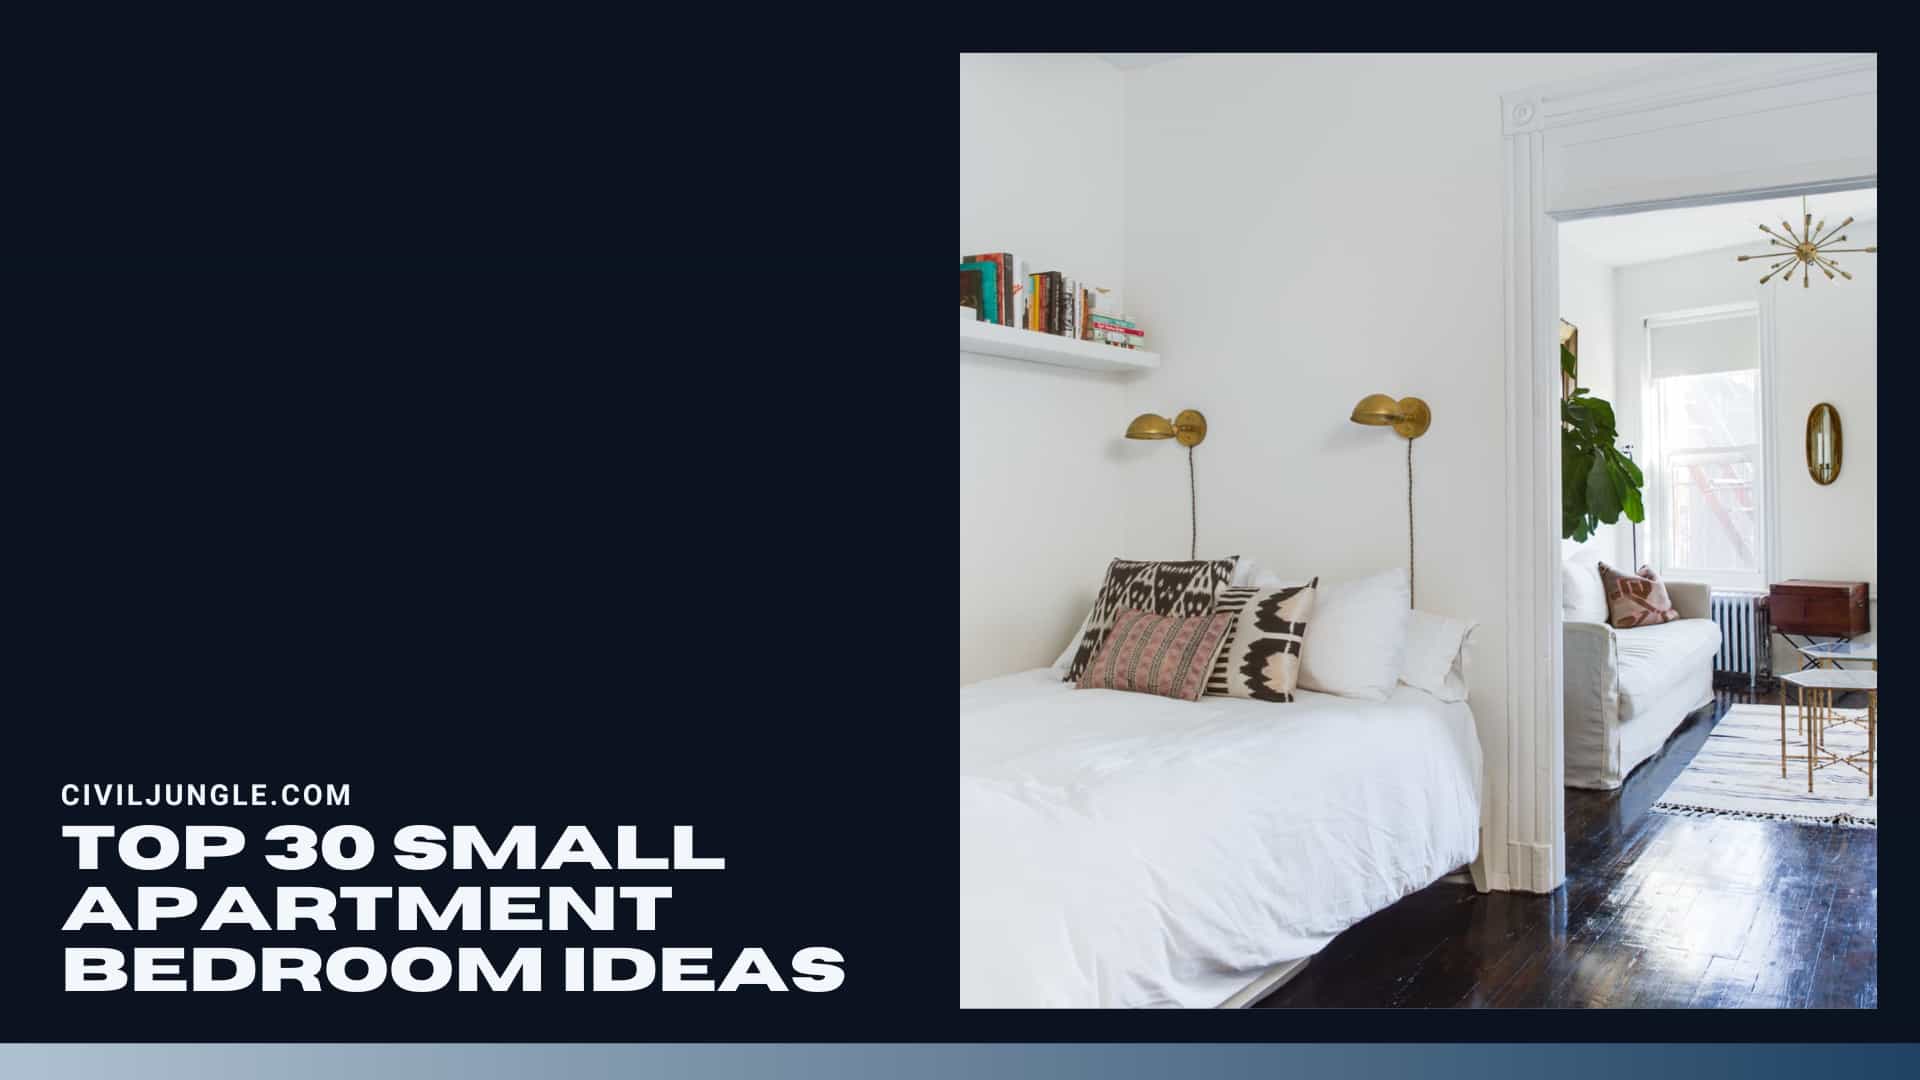 Top 30 Small Apartment Bedroom Ideas